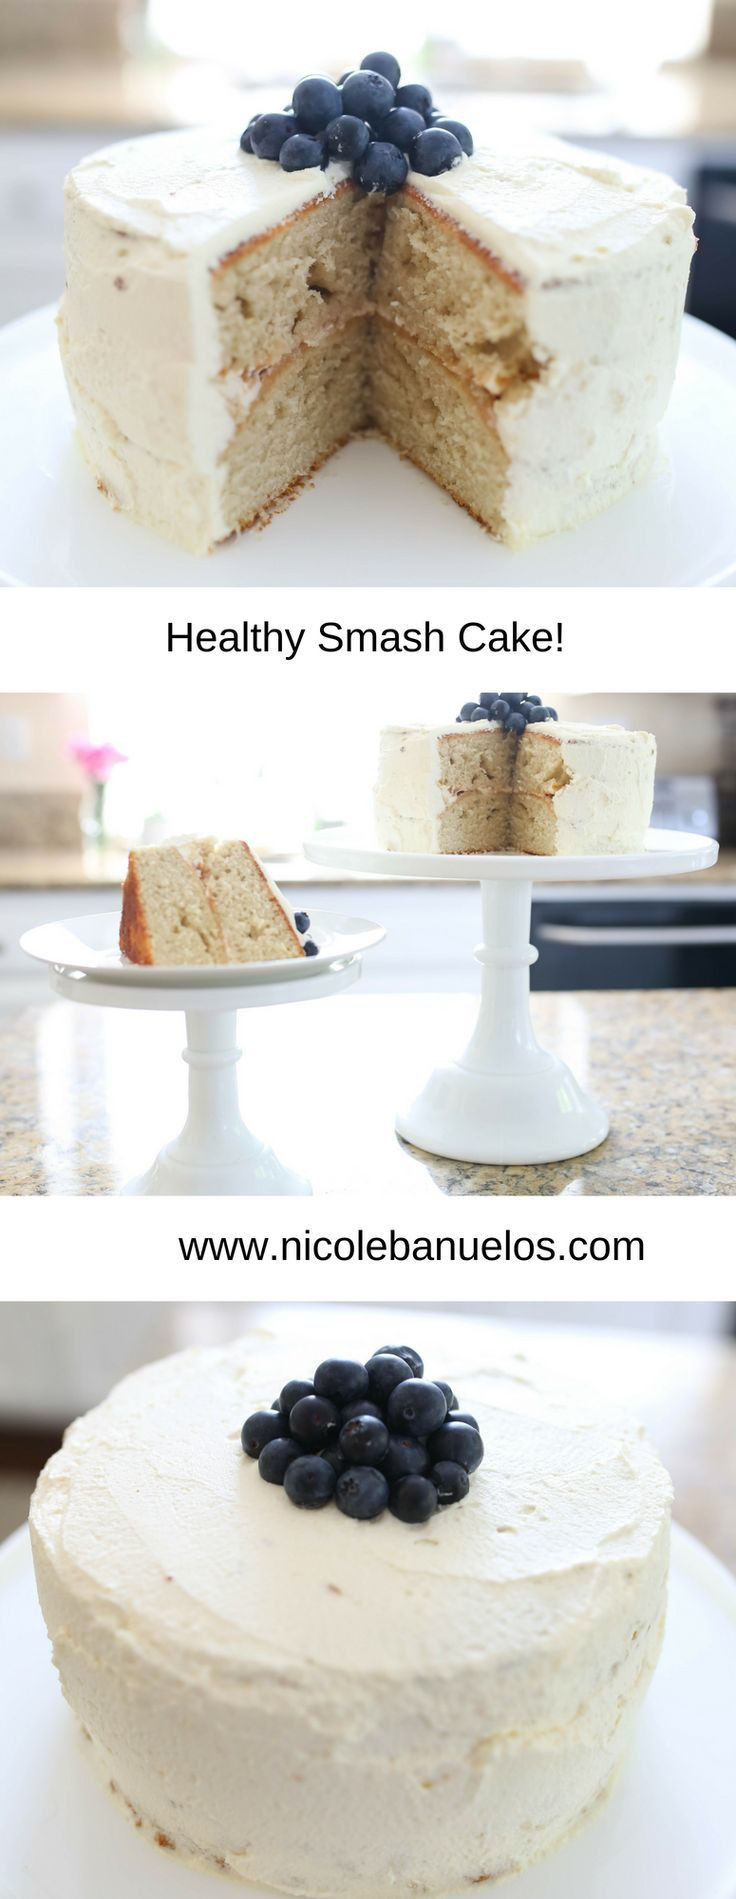 Healthy Smash Cake Recipe 1St Birthday
 Banana Apple Cake Recipe A Healthy Approach for Baby s